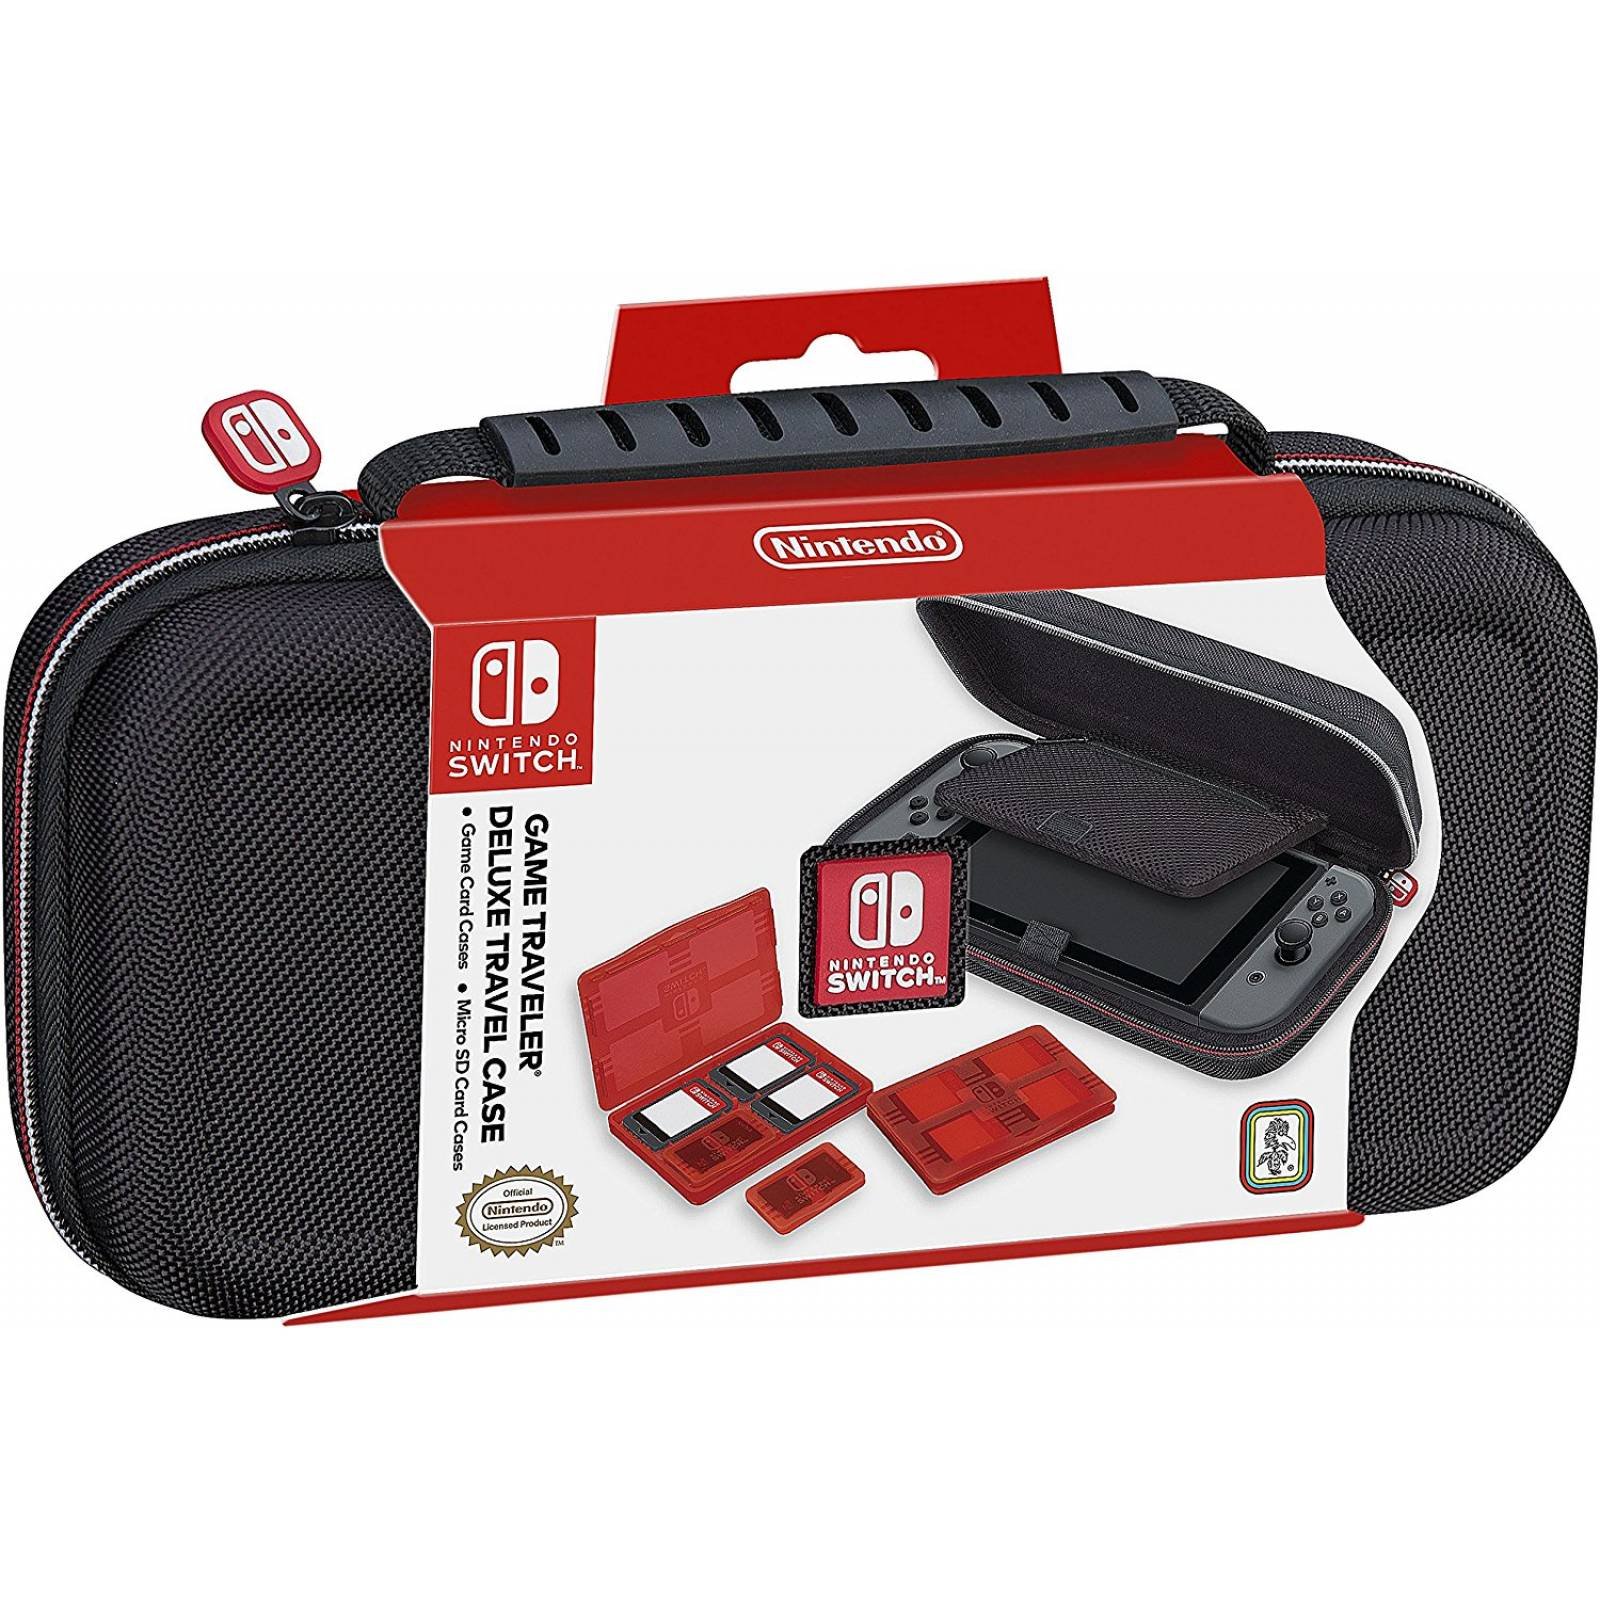 Switch Nintendo juego viajero Travel Deluxe funda